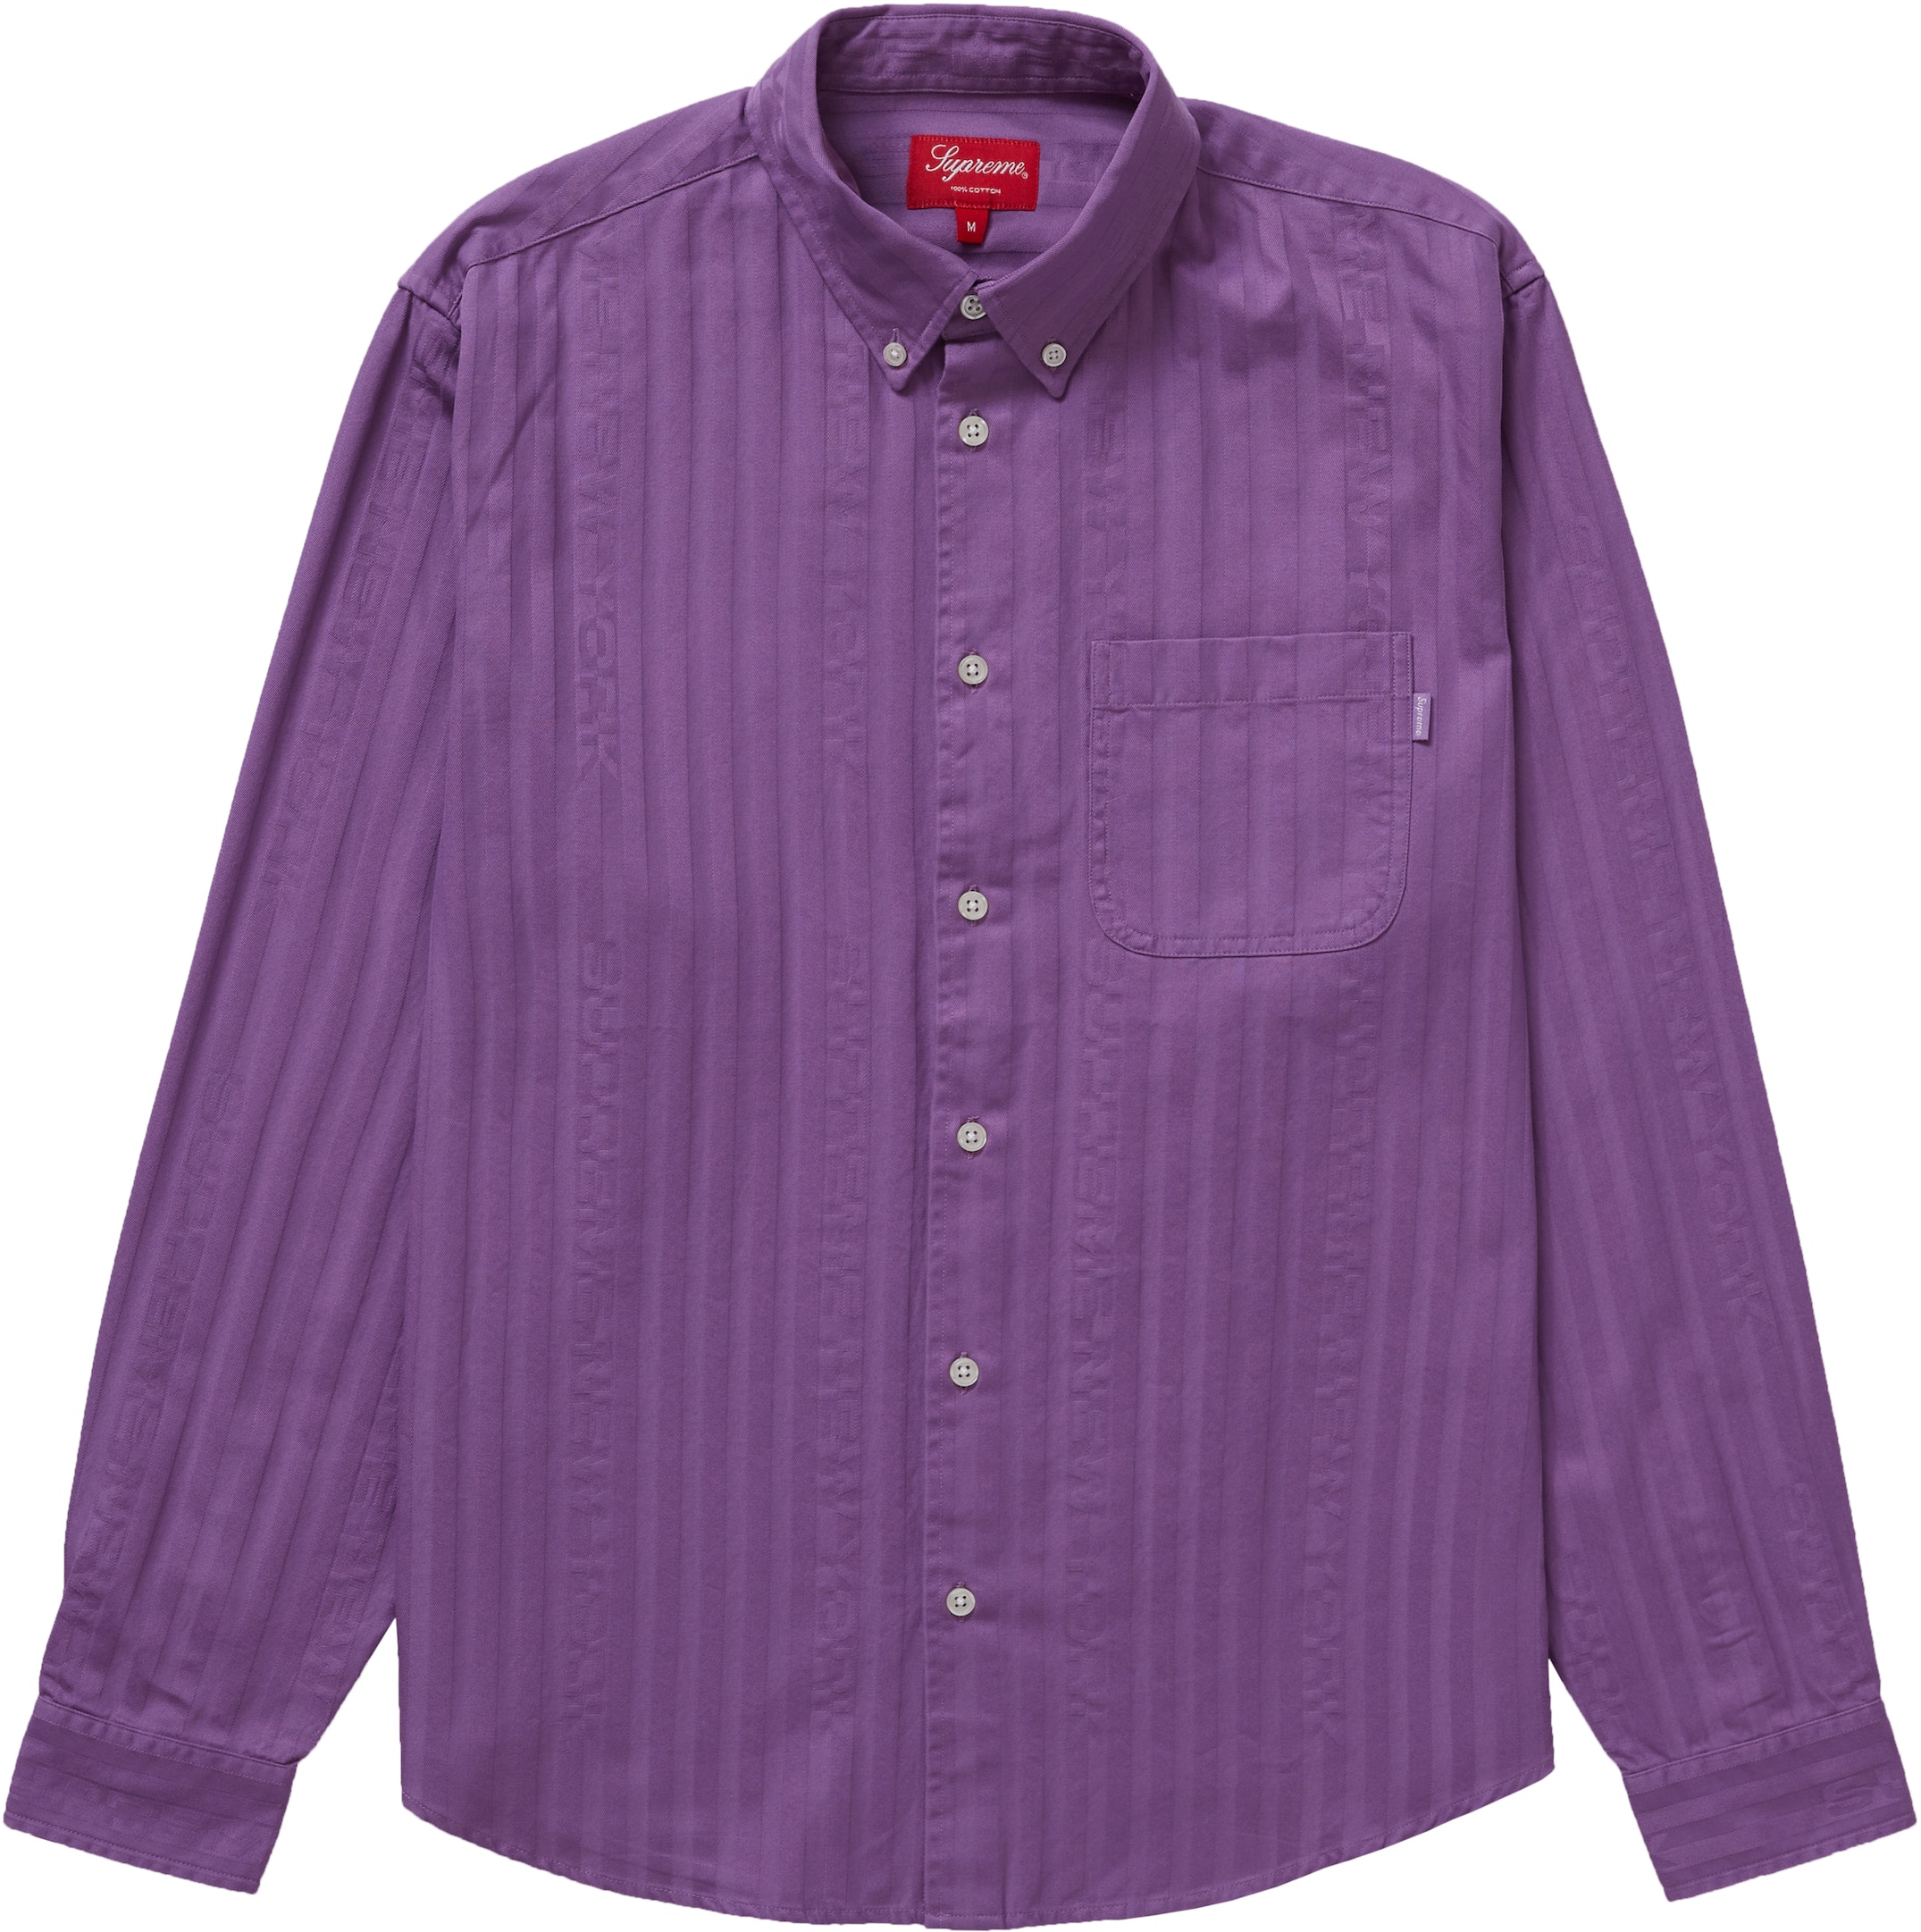 Supreme Jacquard Stripe Twill Shirt Dusty Purple - FW20